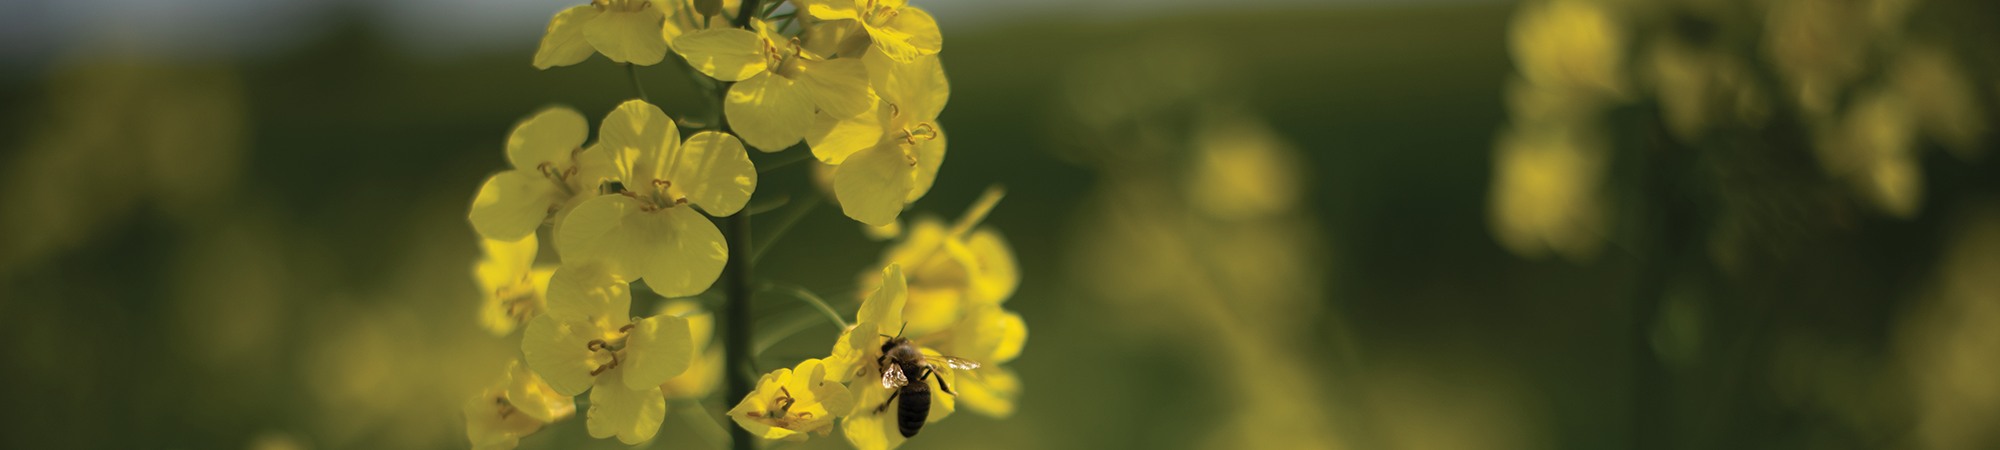 panorama - pszczoła na kwiatku